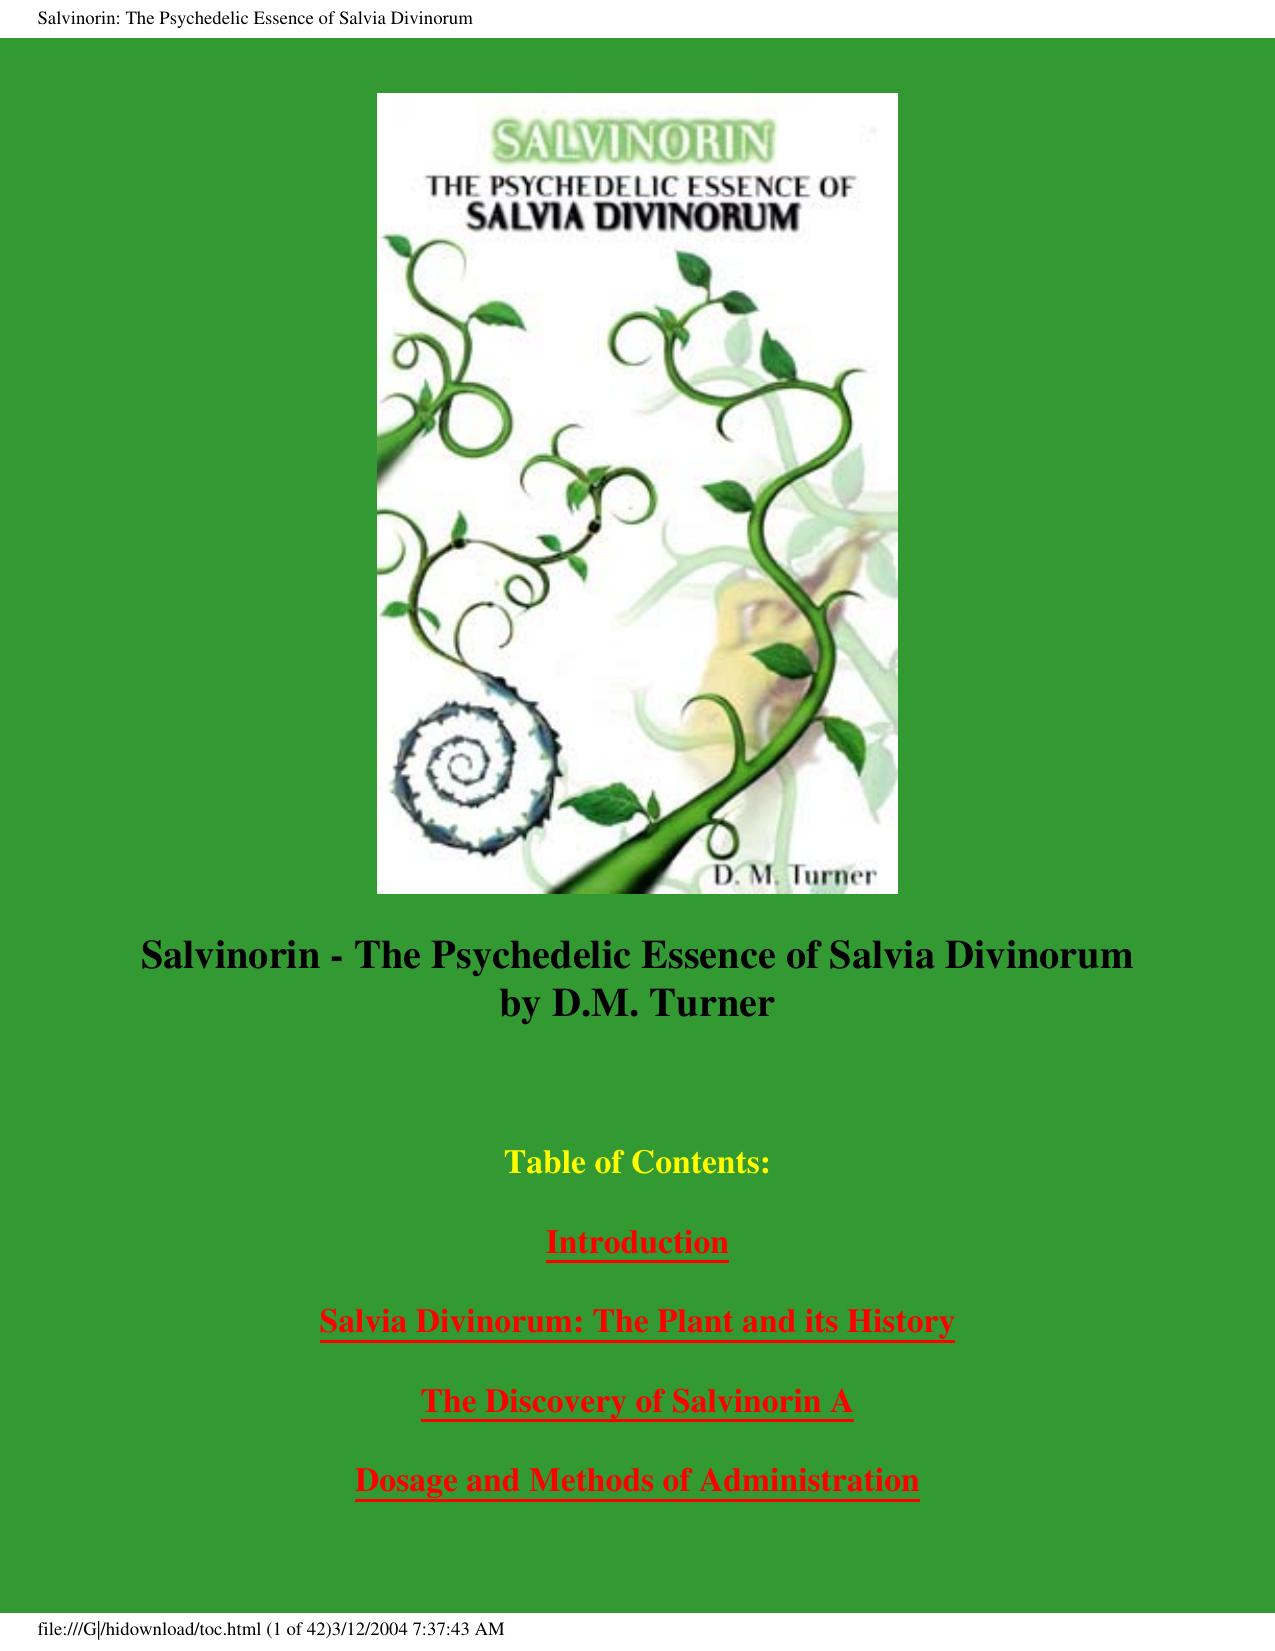 Salvinorin: The Psychedelic Essence of Salvia Divinorum